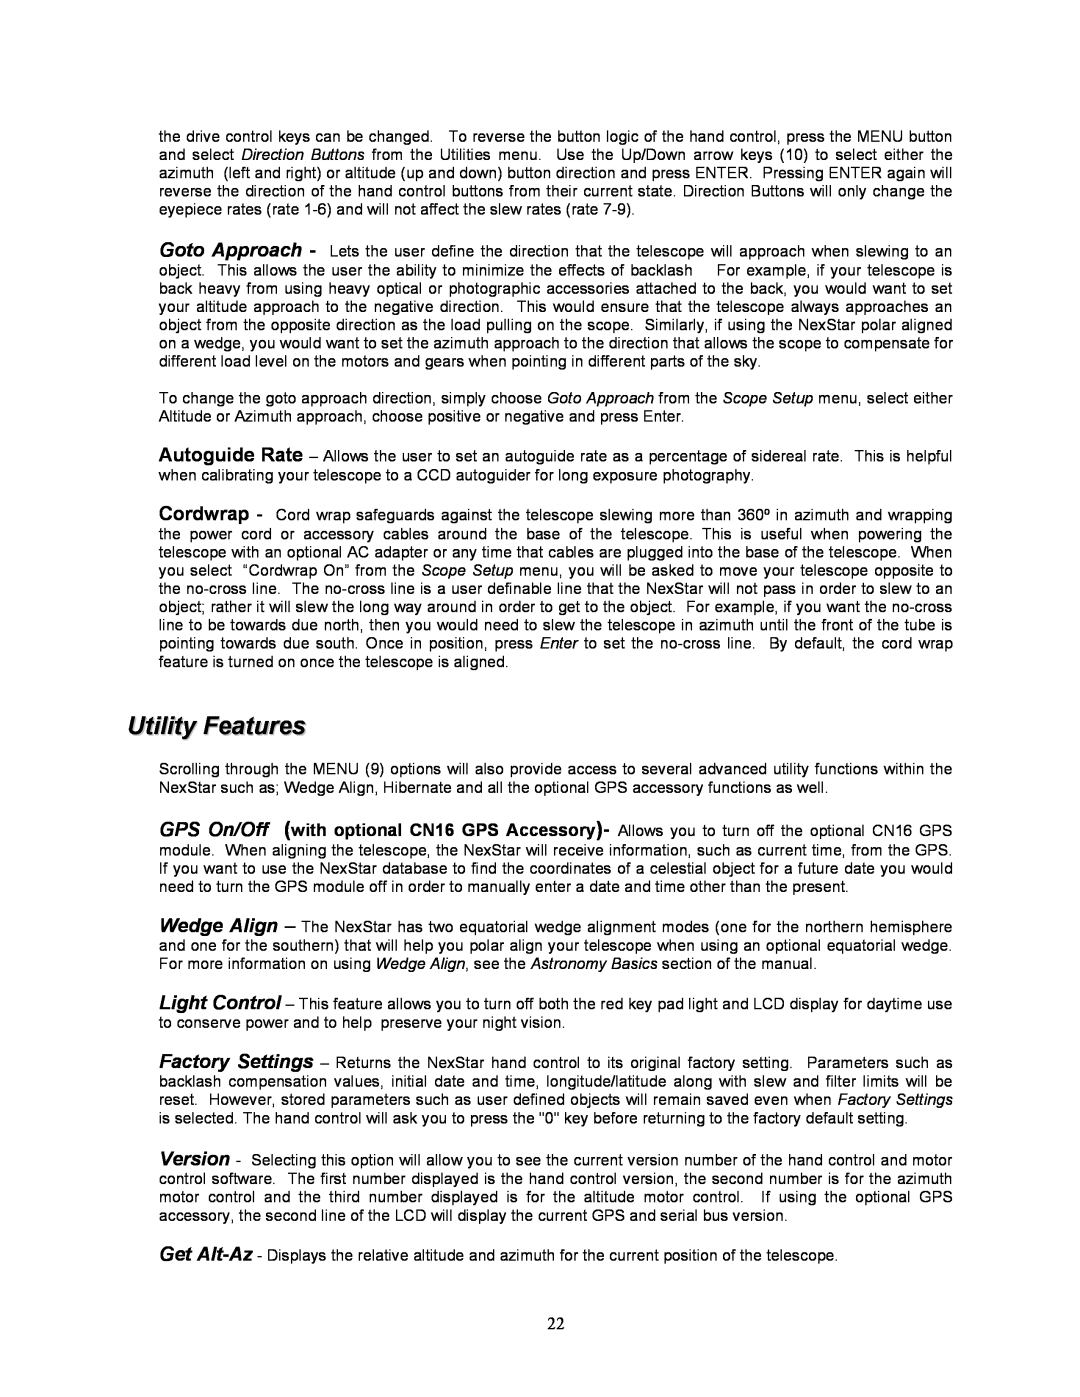 Celestron NexStar 8i manual Utility Features 